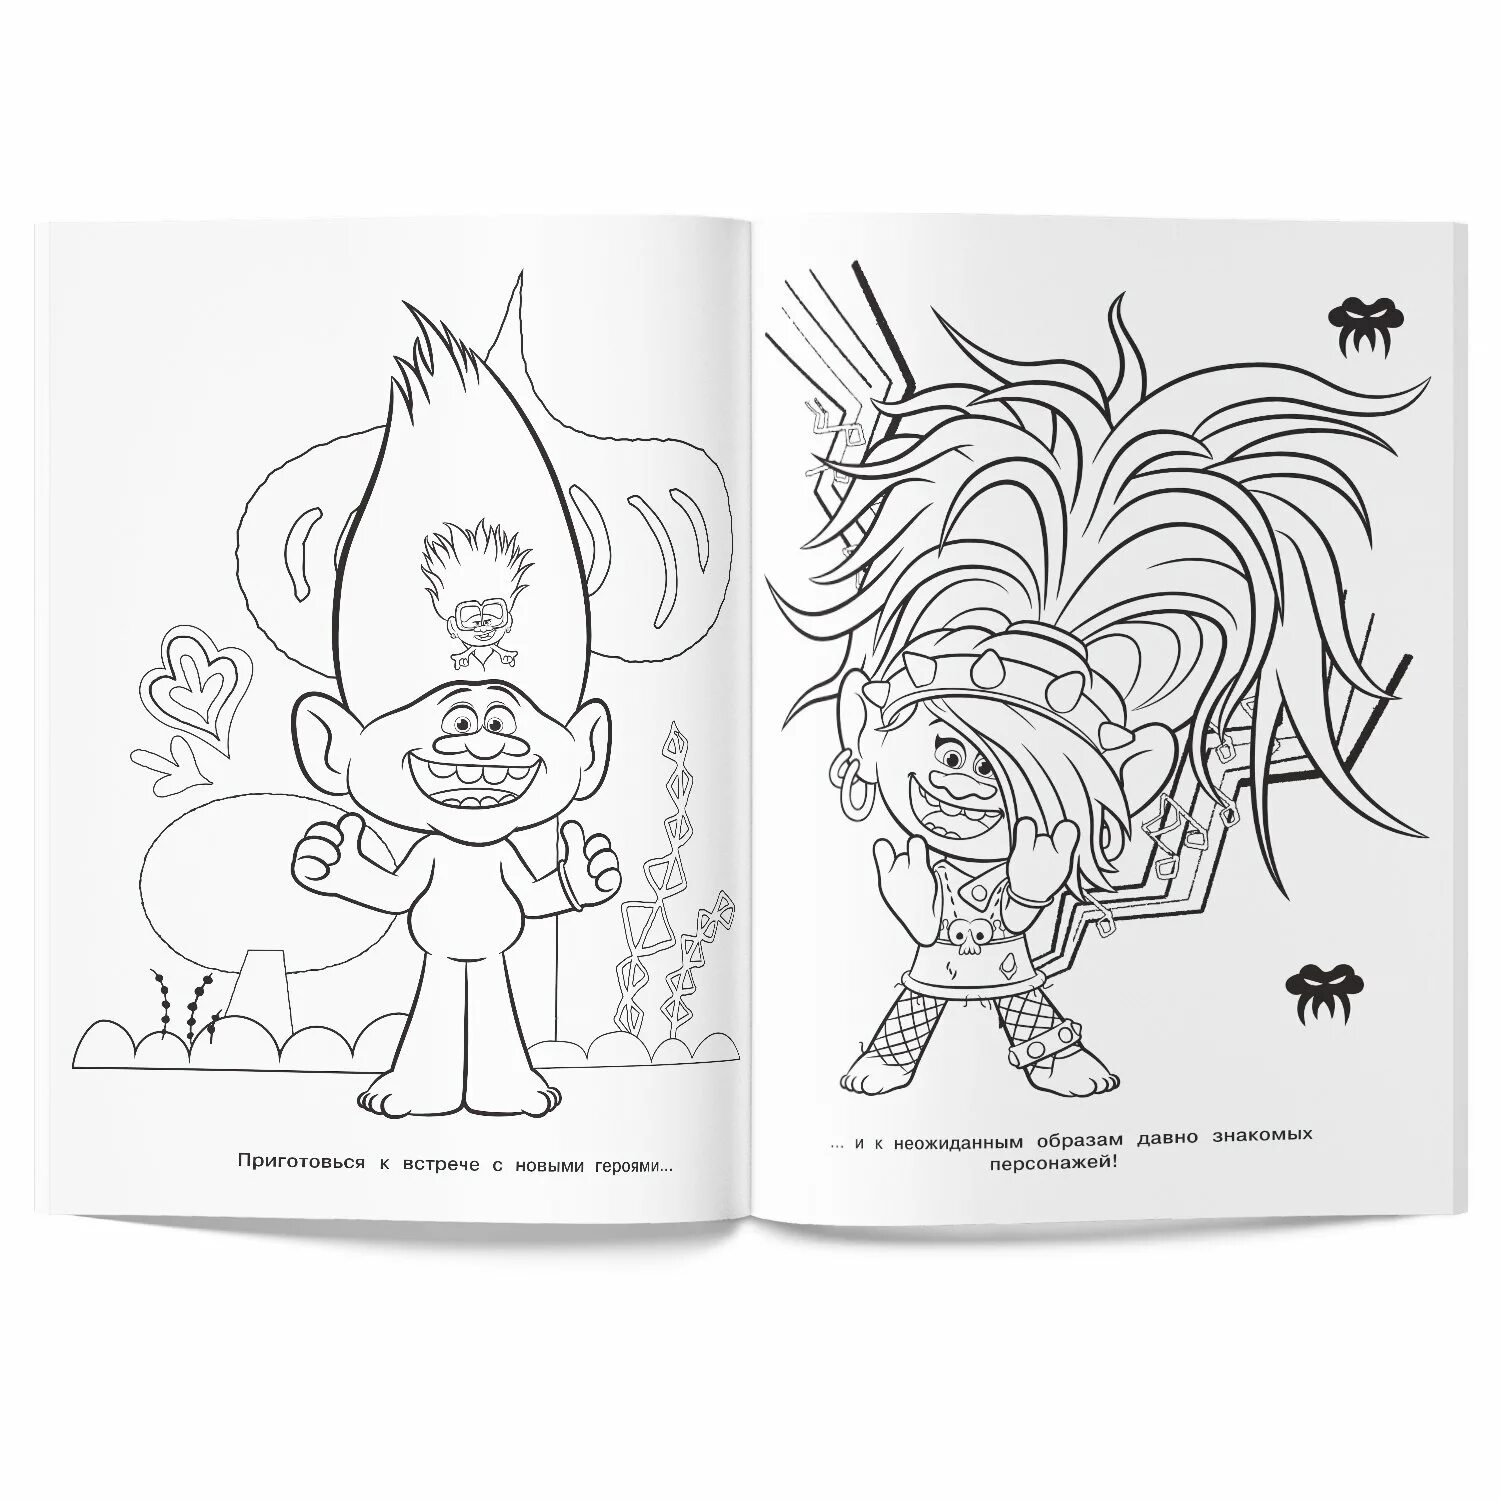 Cute rock trolls coloring book